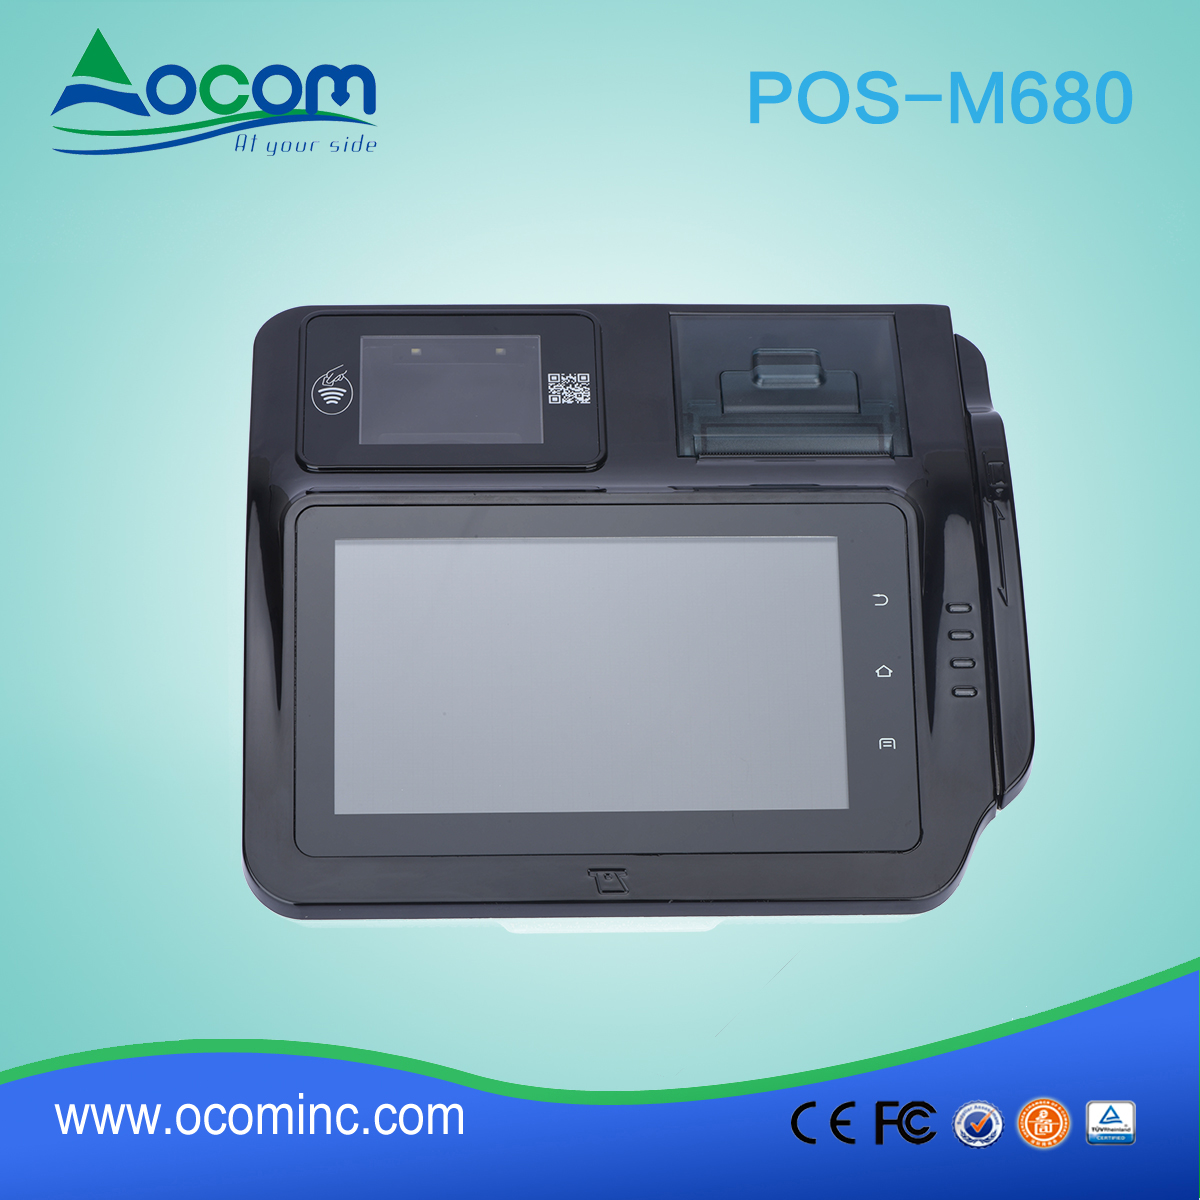 (POS-M680) Terminal Android POS con impresora térmica